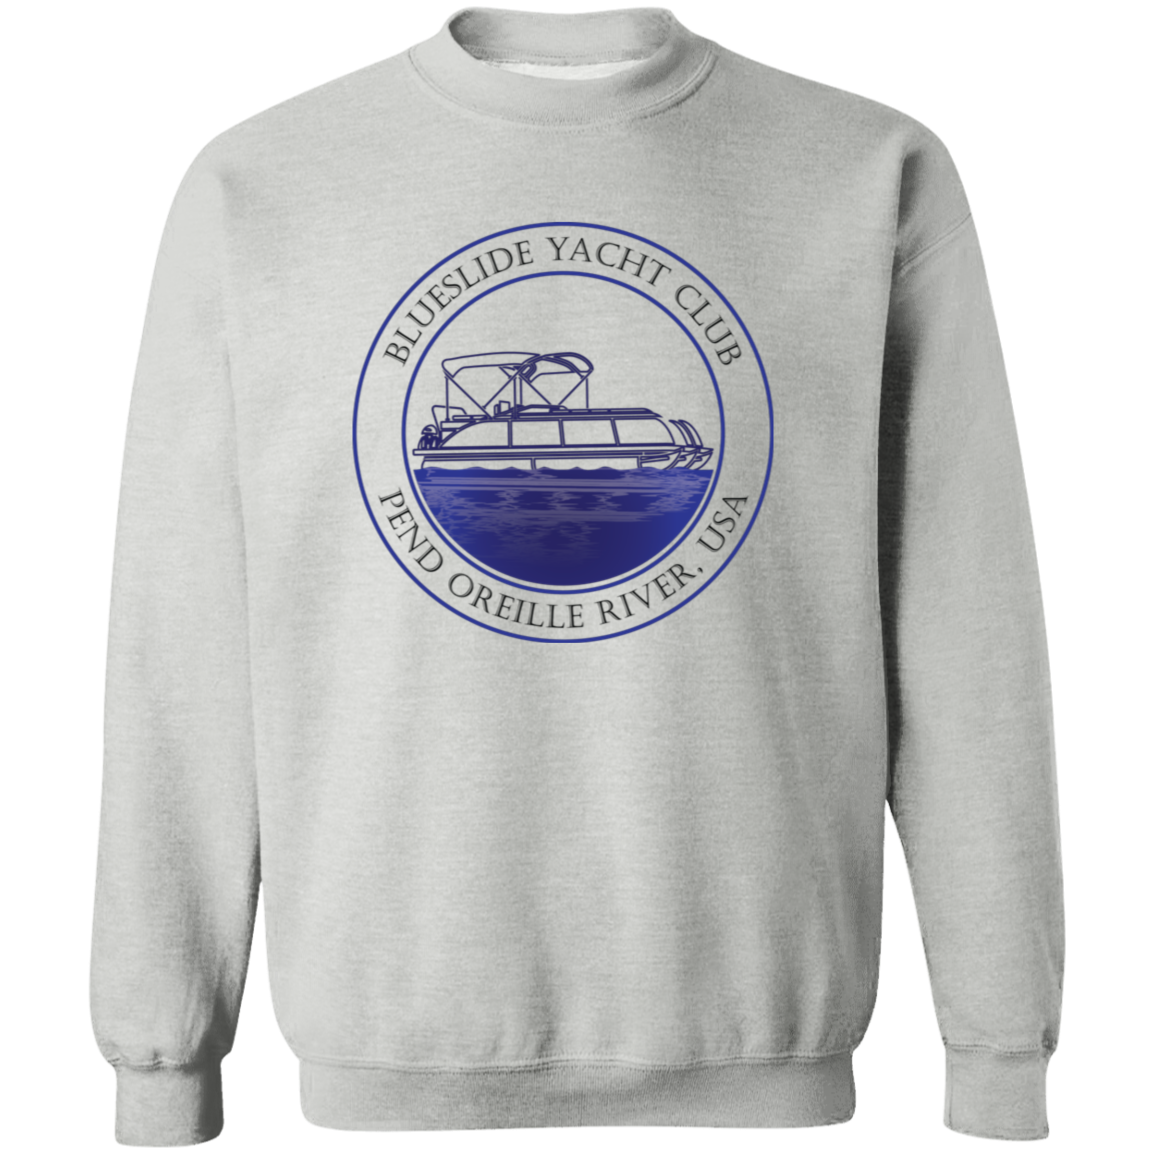 Blueslide Yacht Club - Sweatshirt